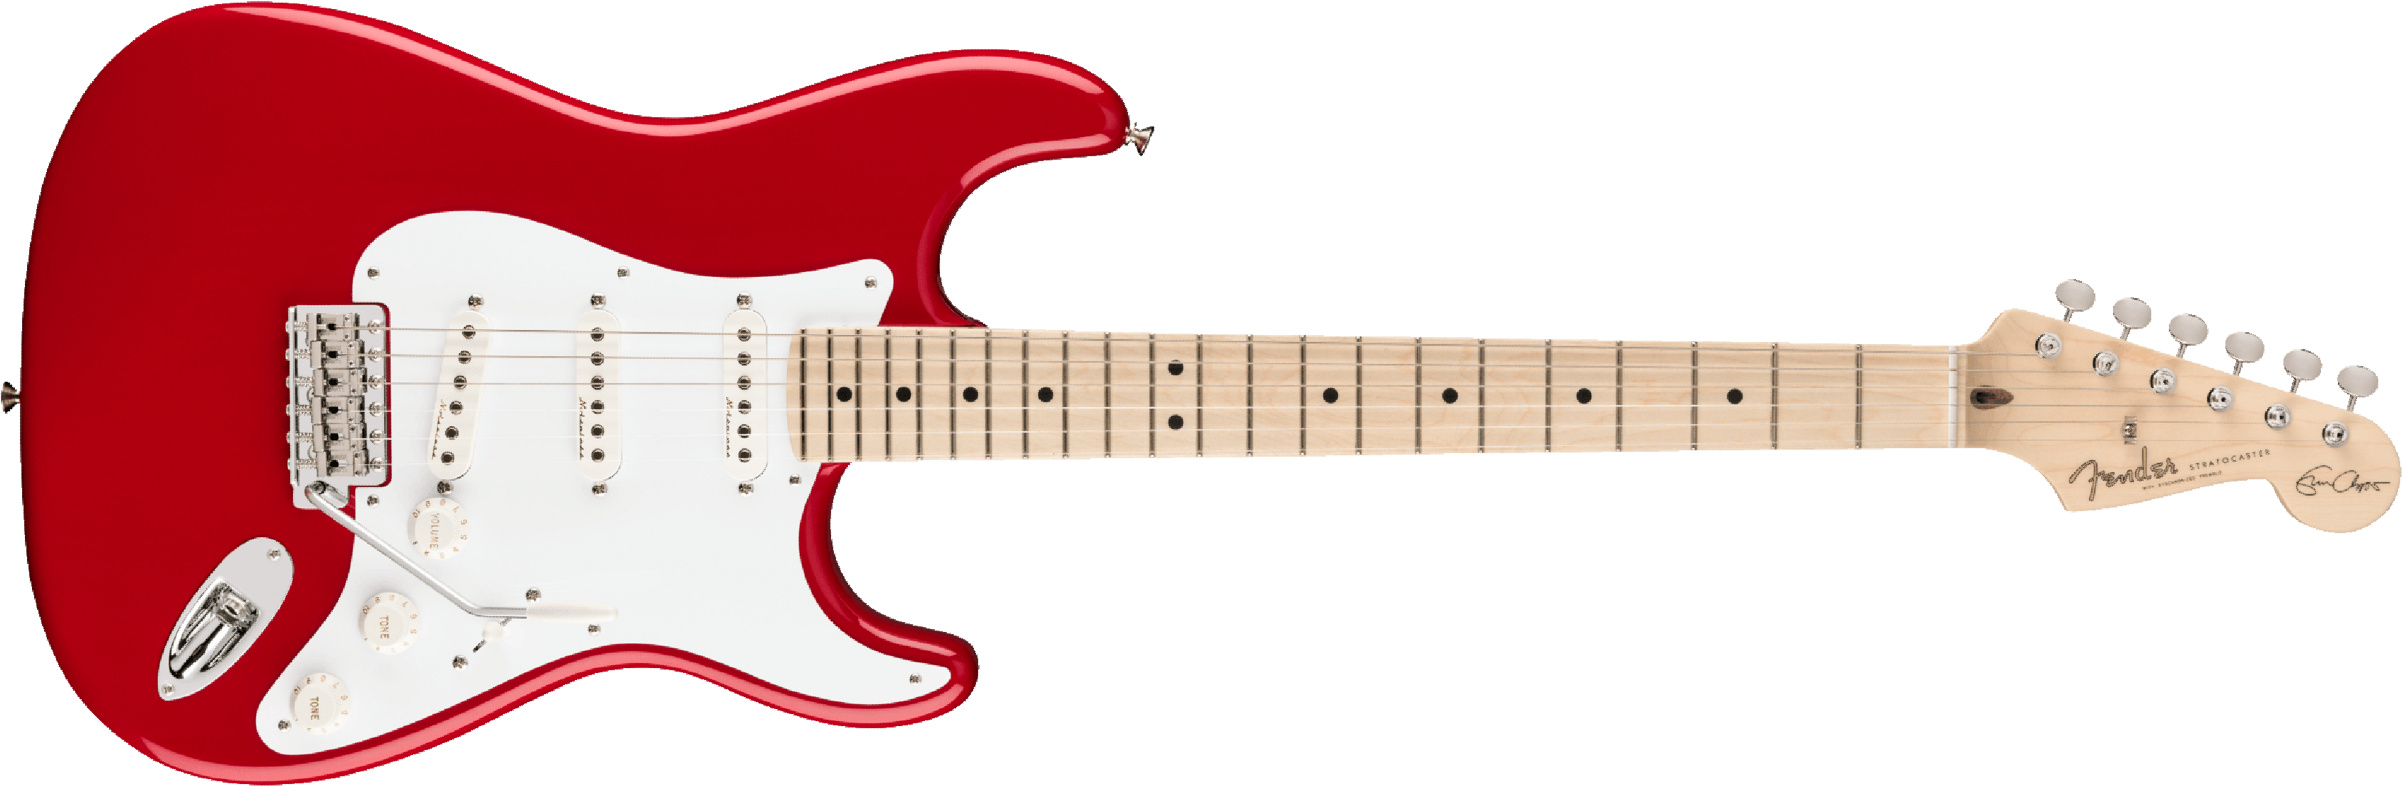 Fender Stratocaster Artist Eric Clapton Signature Torino Red - Guitare Électrique Forme Str - Main picture